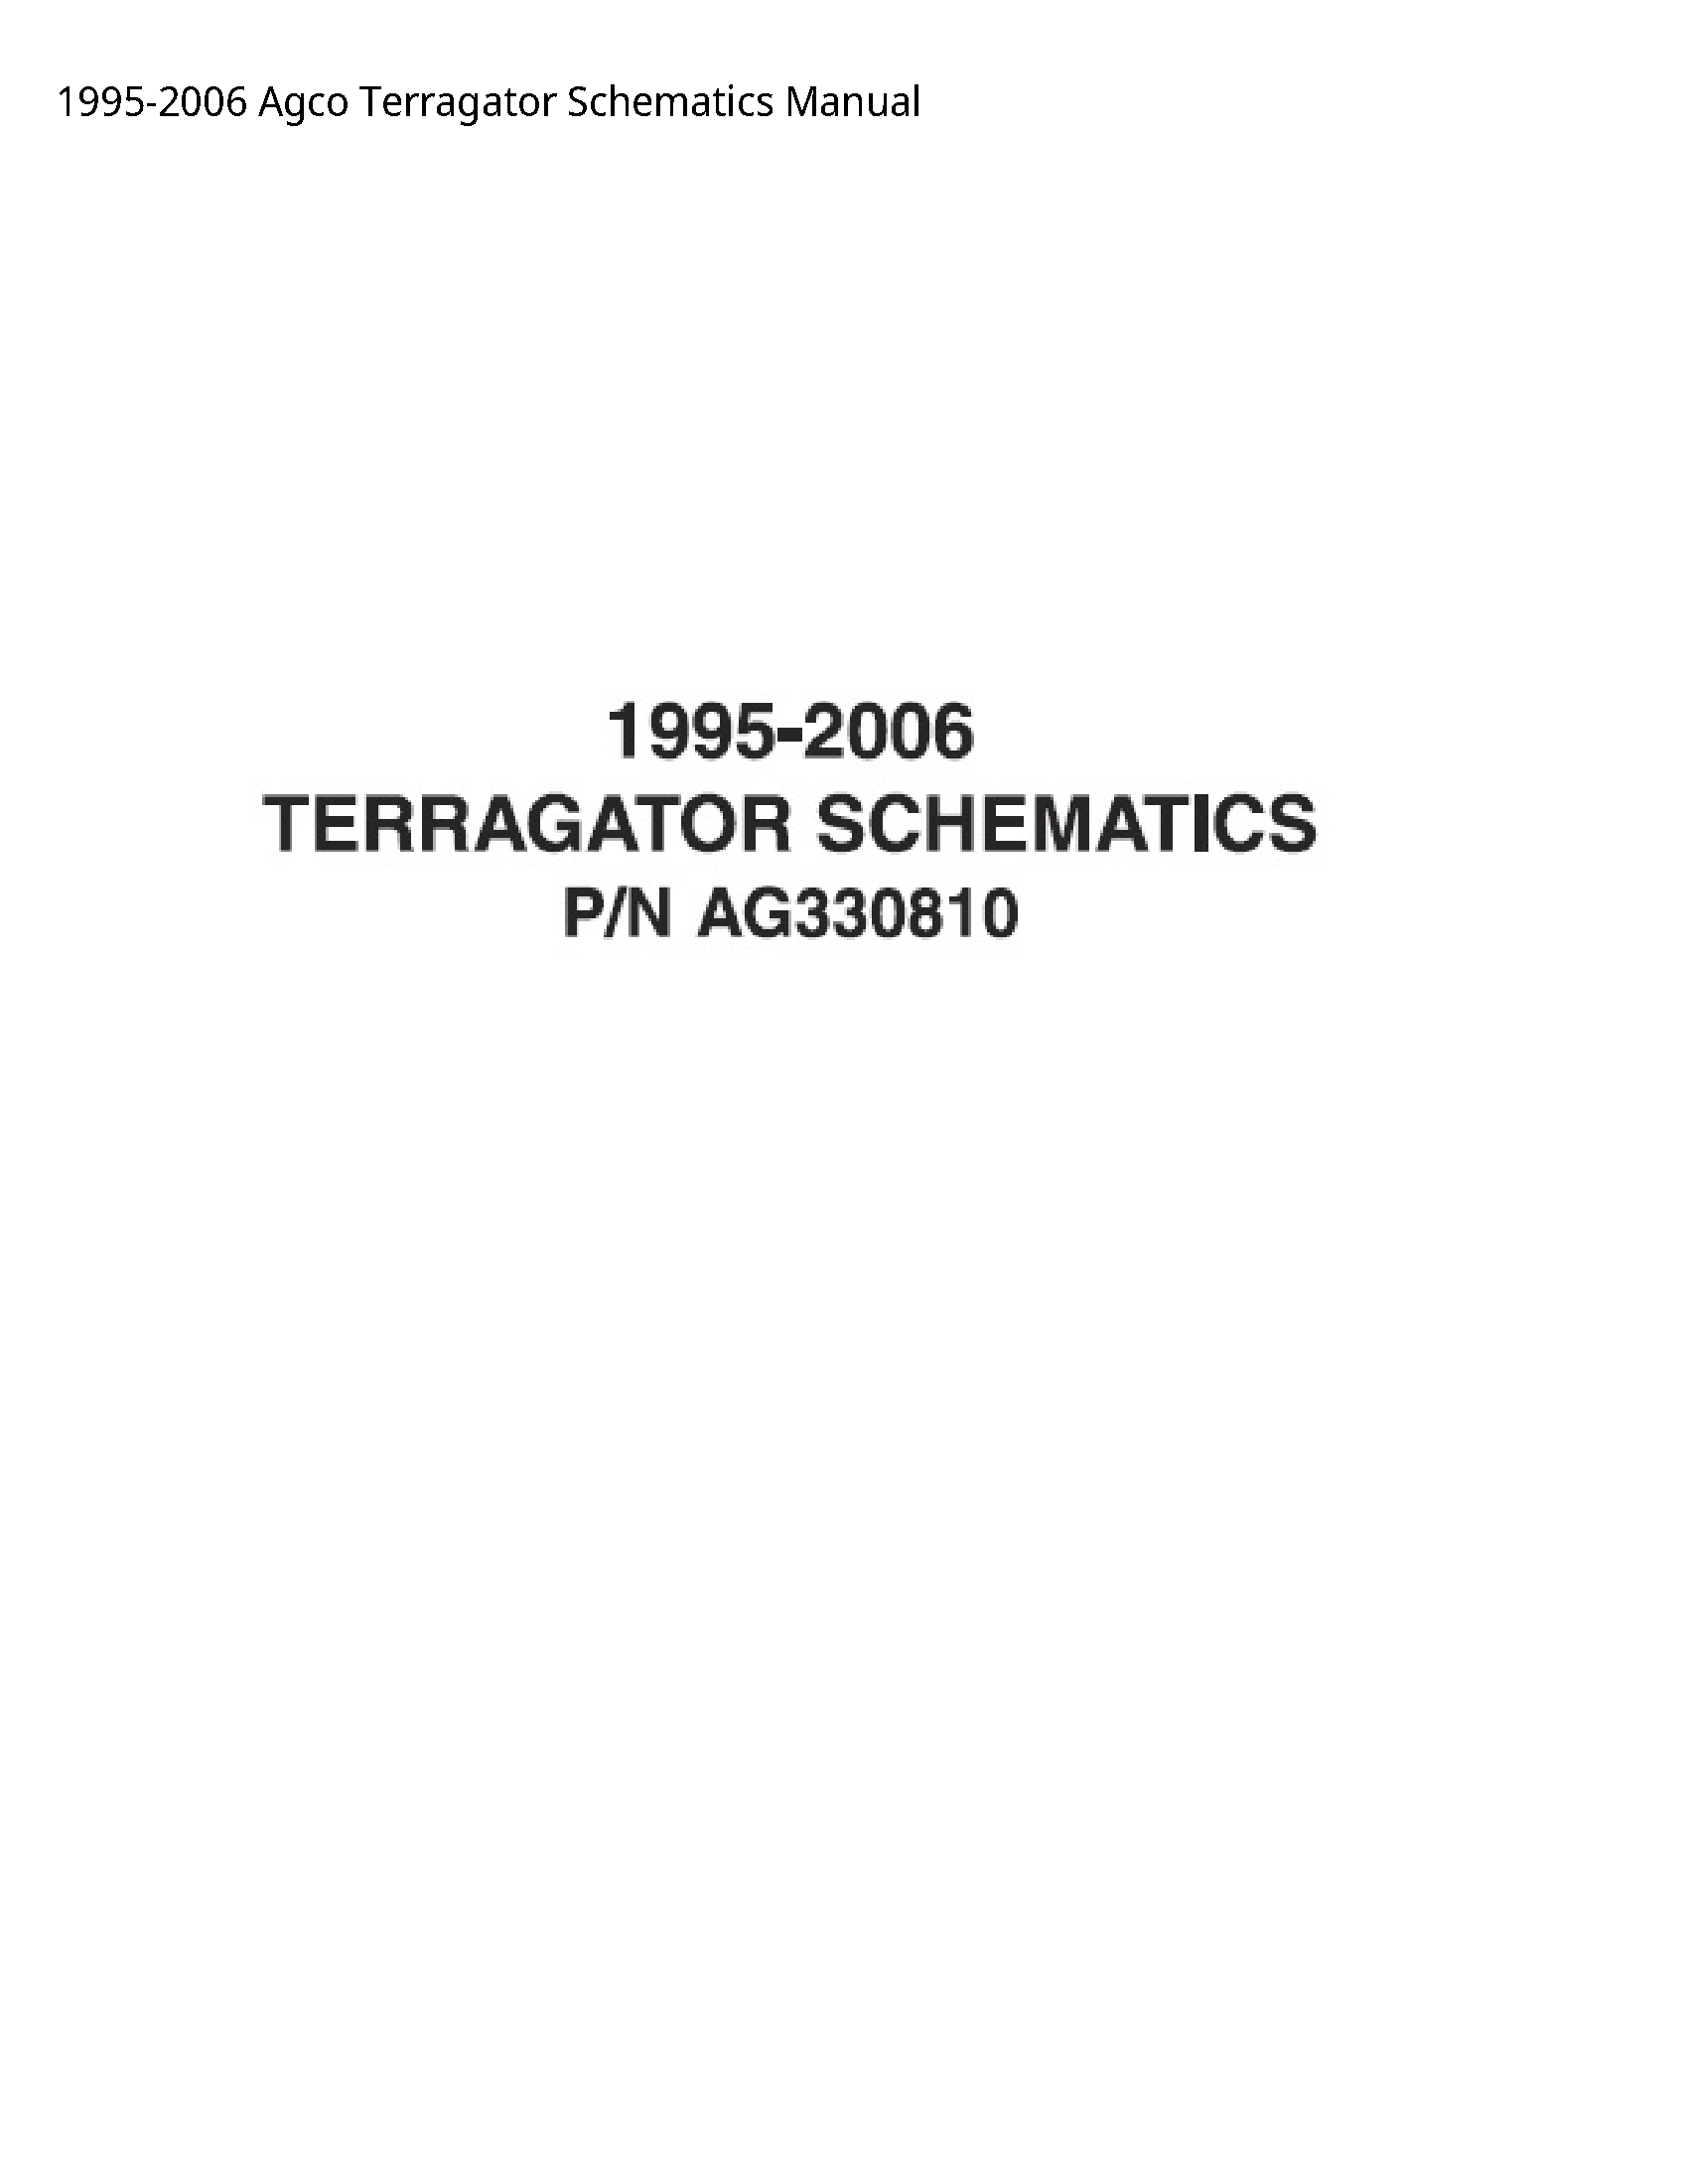 AGCO Terragator Schematics manual